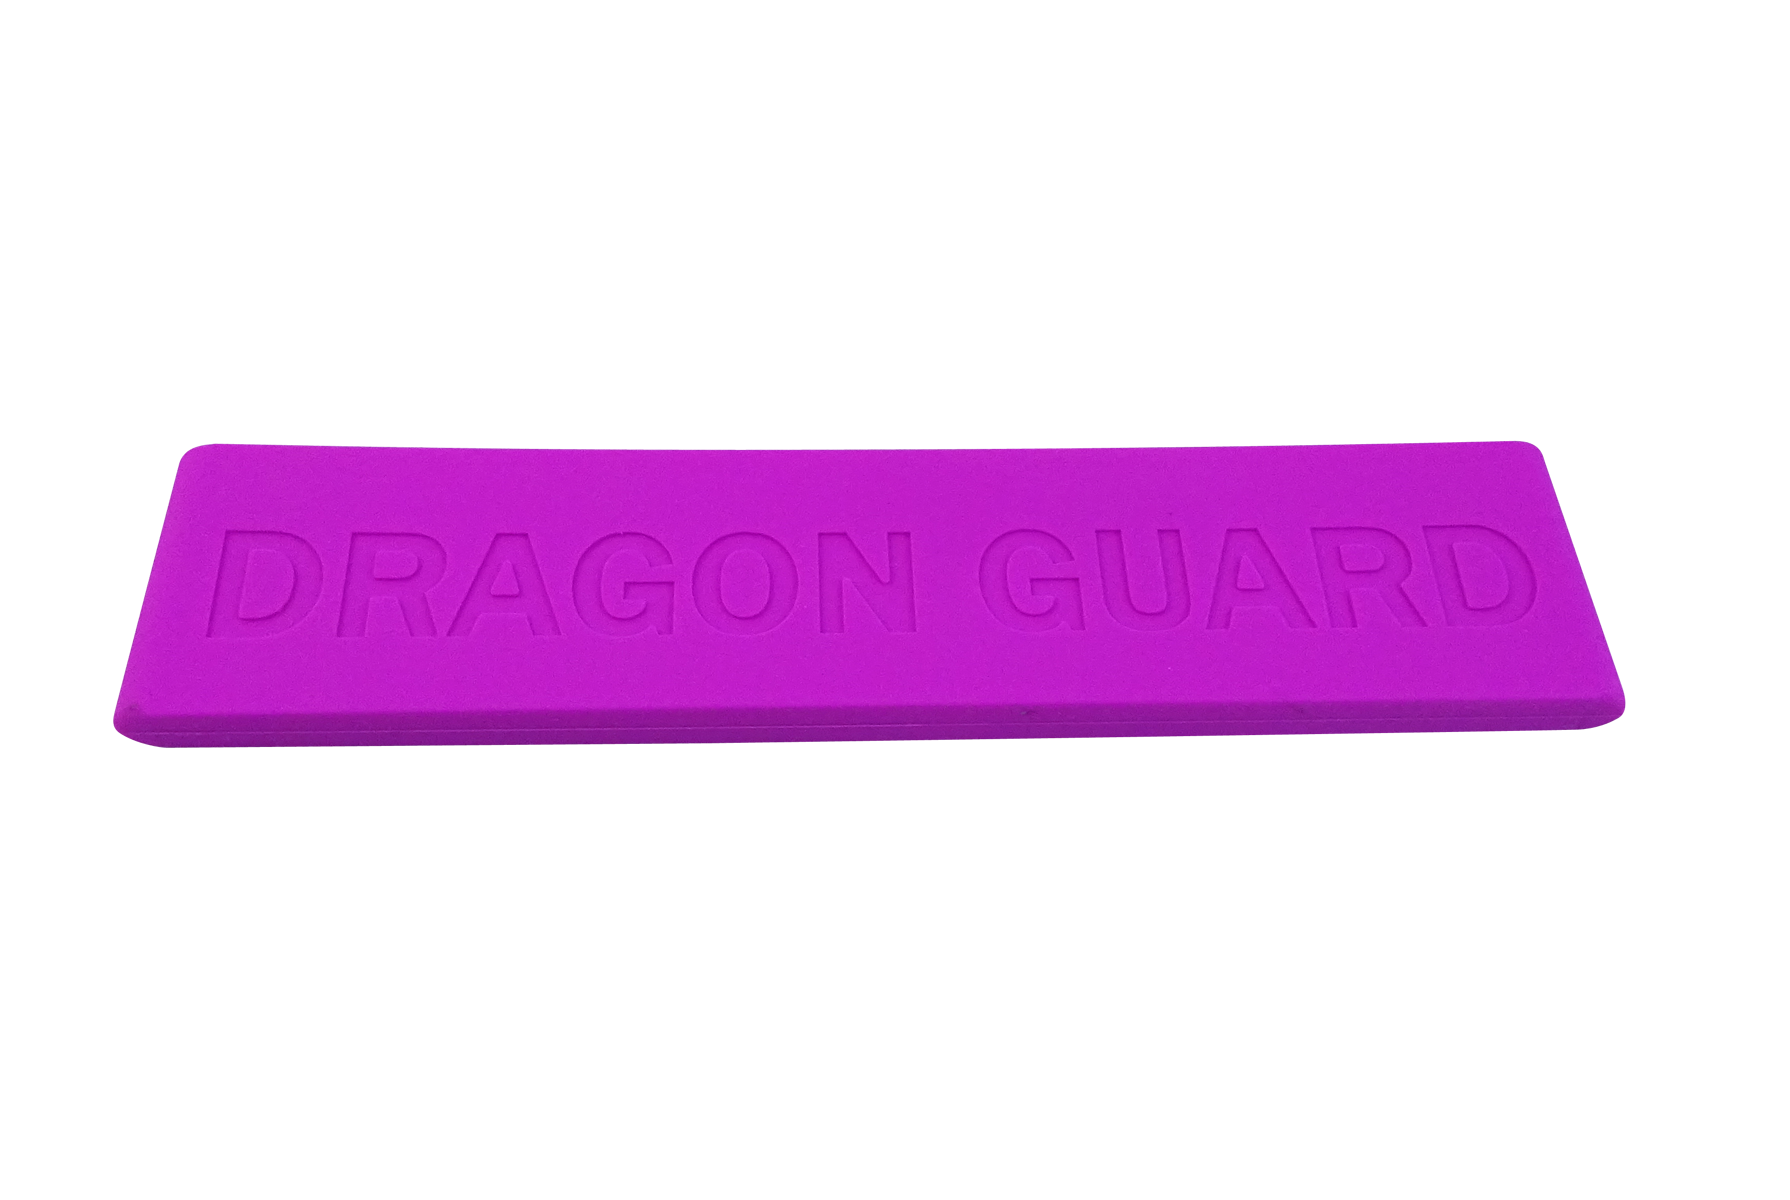 Dragon Guard (Tip Protector)